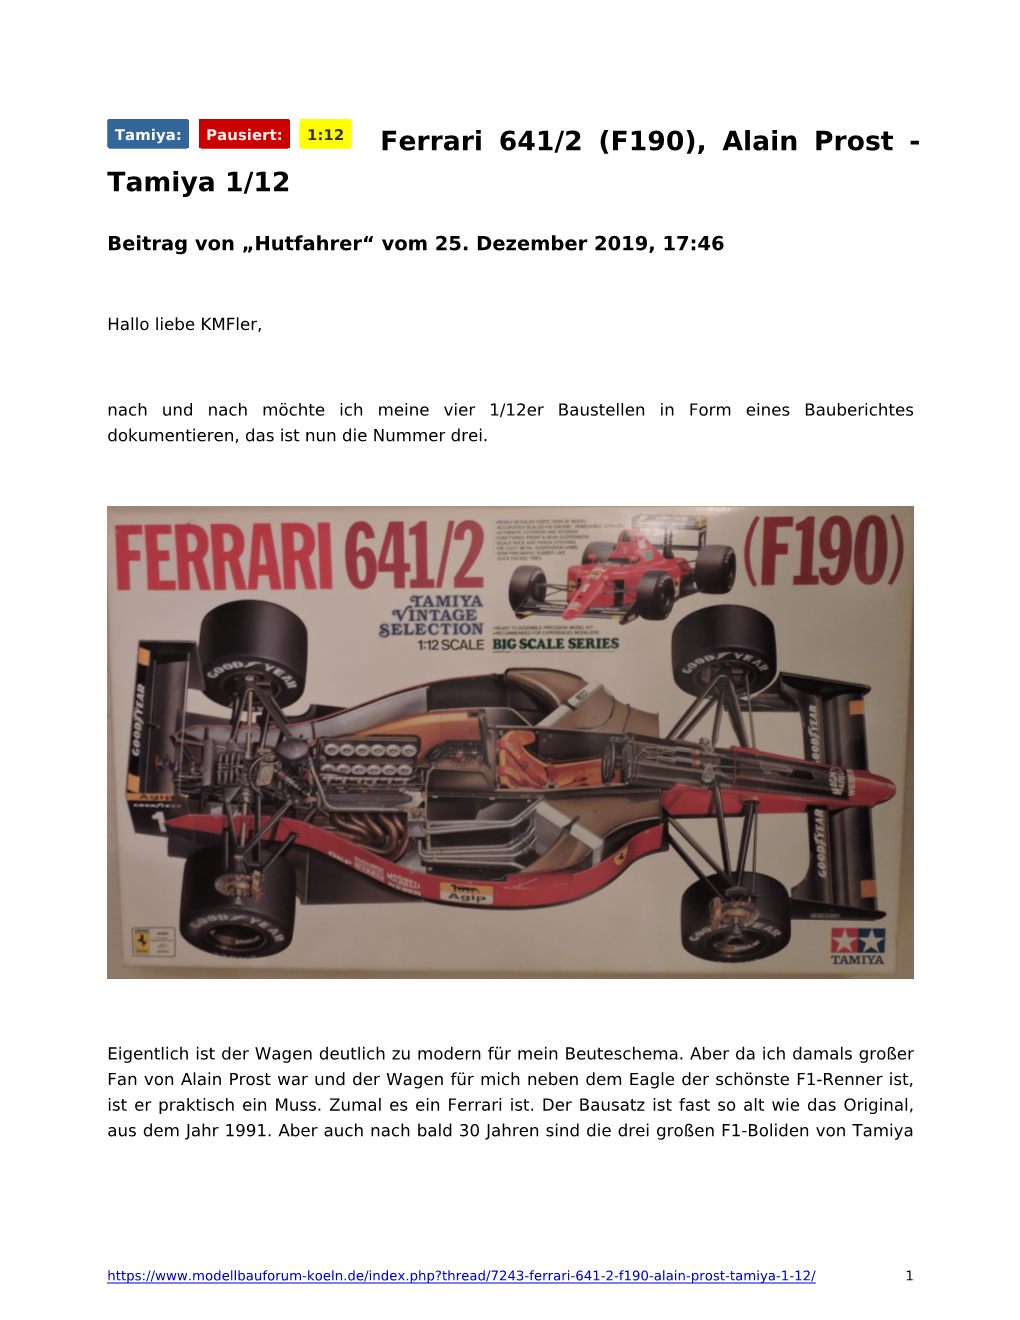 Ferrari 641/2 (F190), Alain Prost - Tamiya 1/12